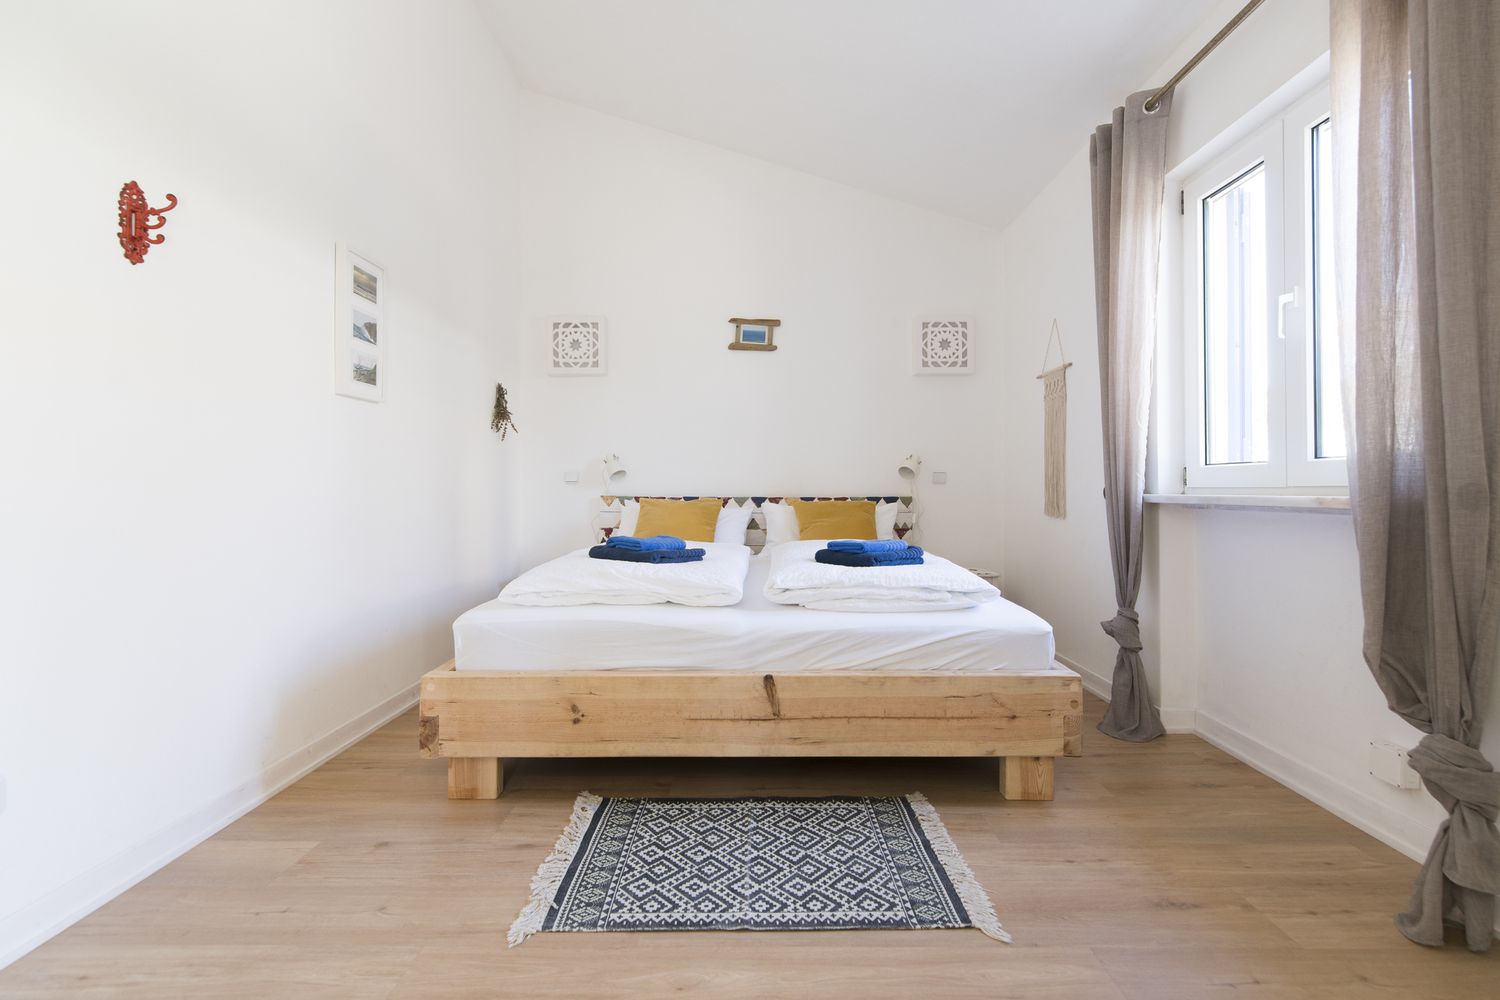 bedroom with hardwood floors